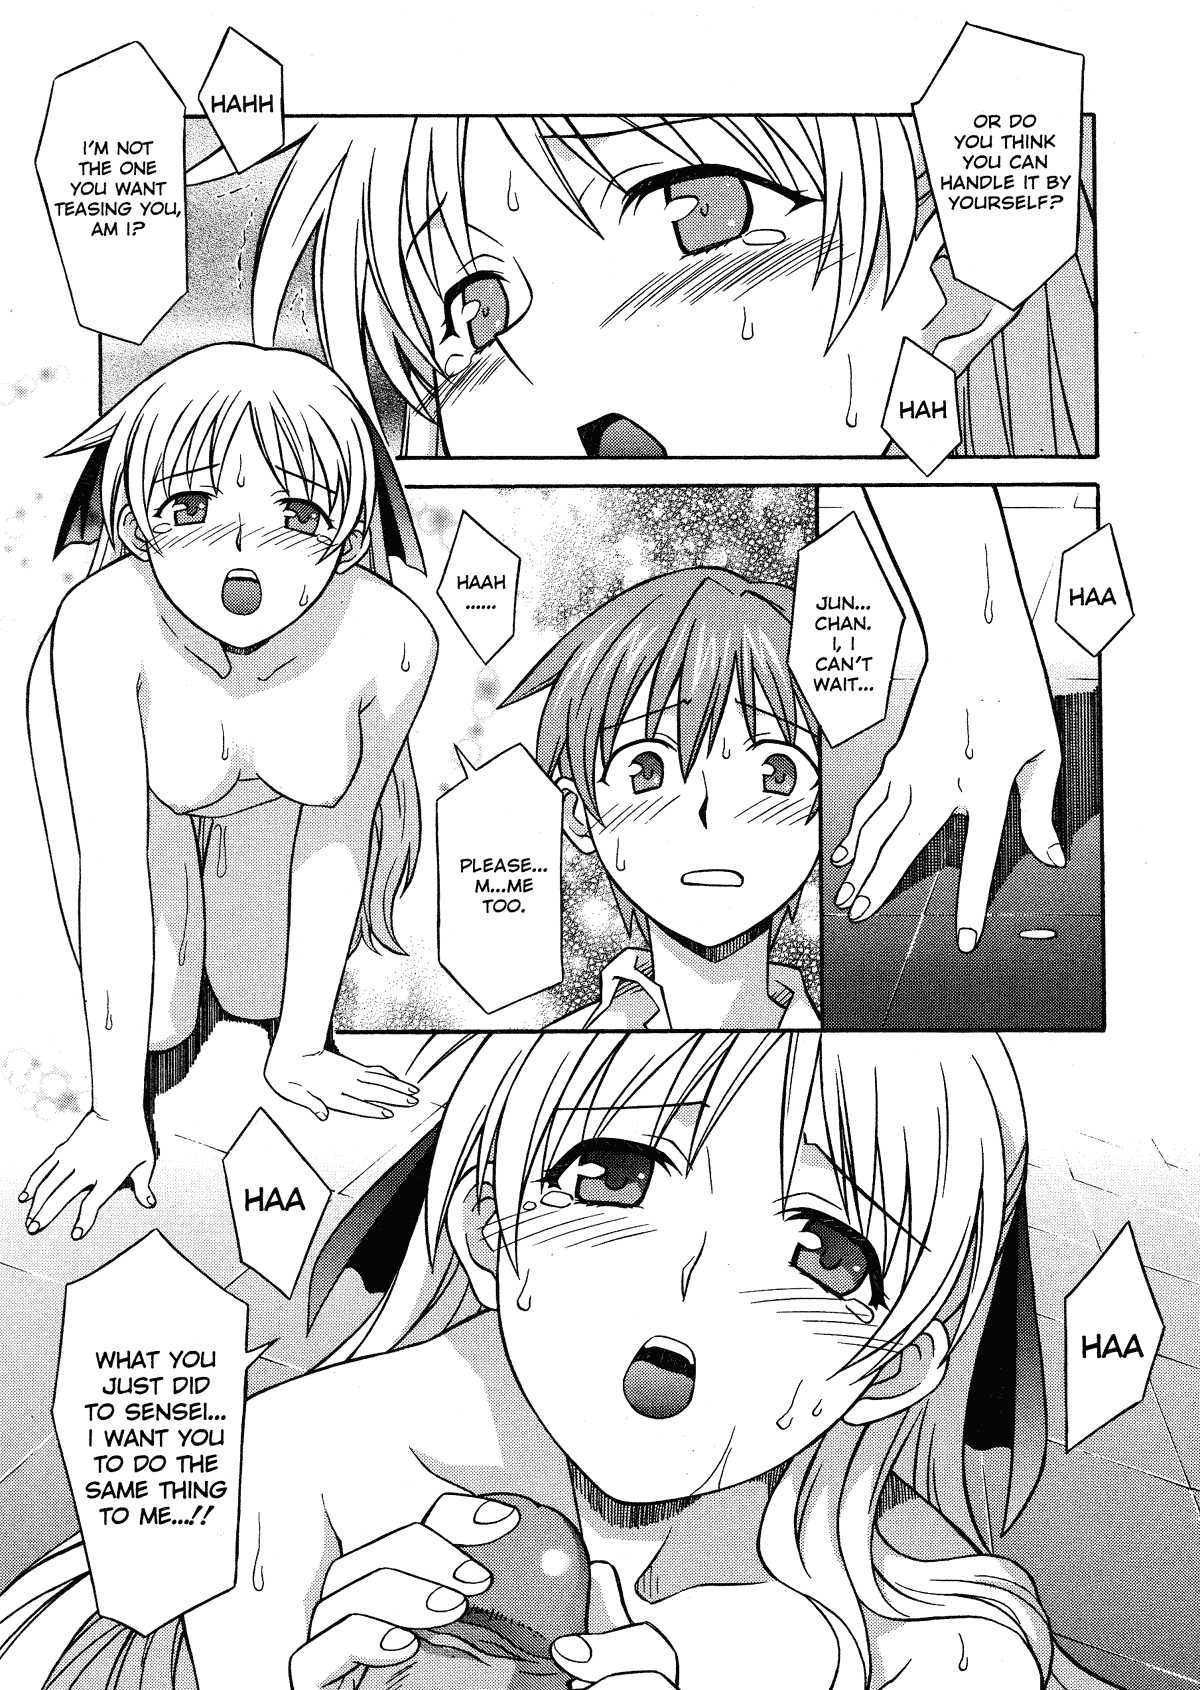 Reading Please Miss Yuri Original Hentai By 1 Please Miss Yuri [end] Page 32 Hentai Manga